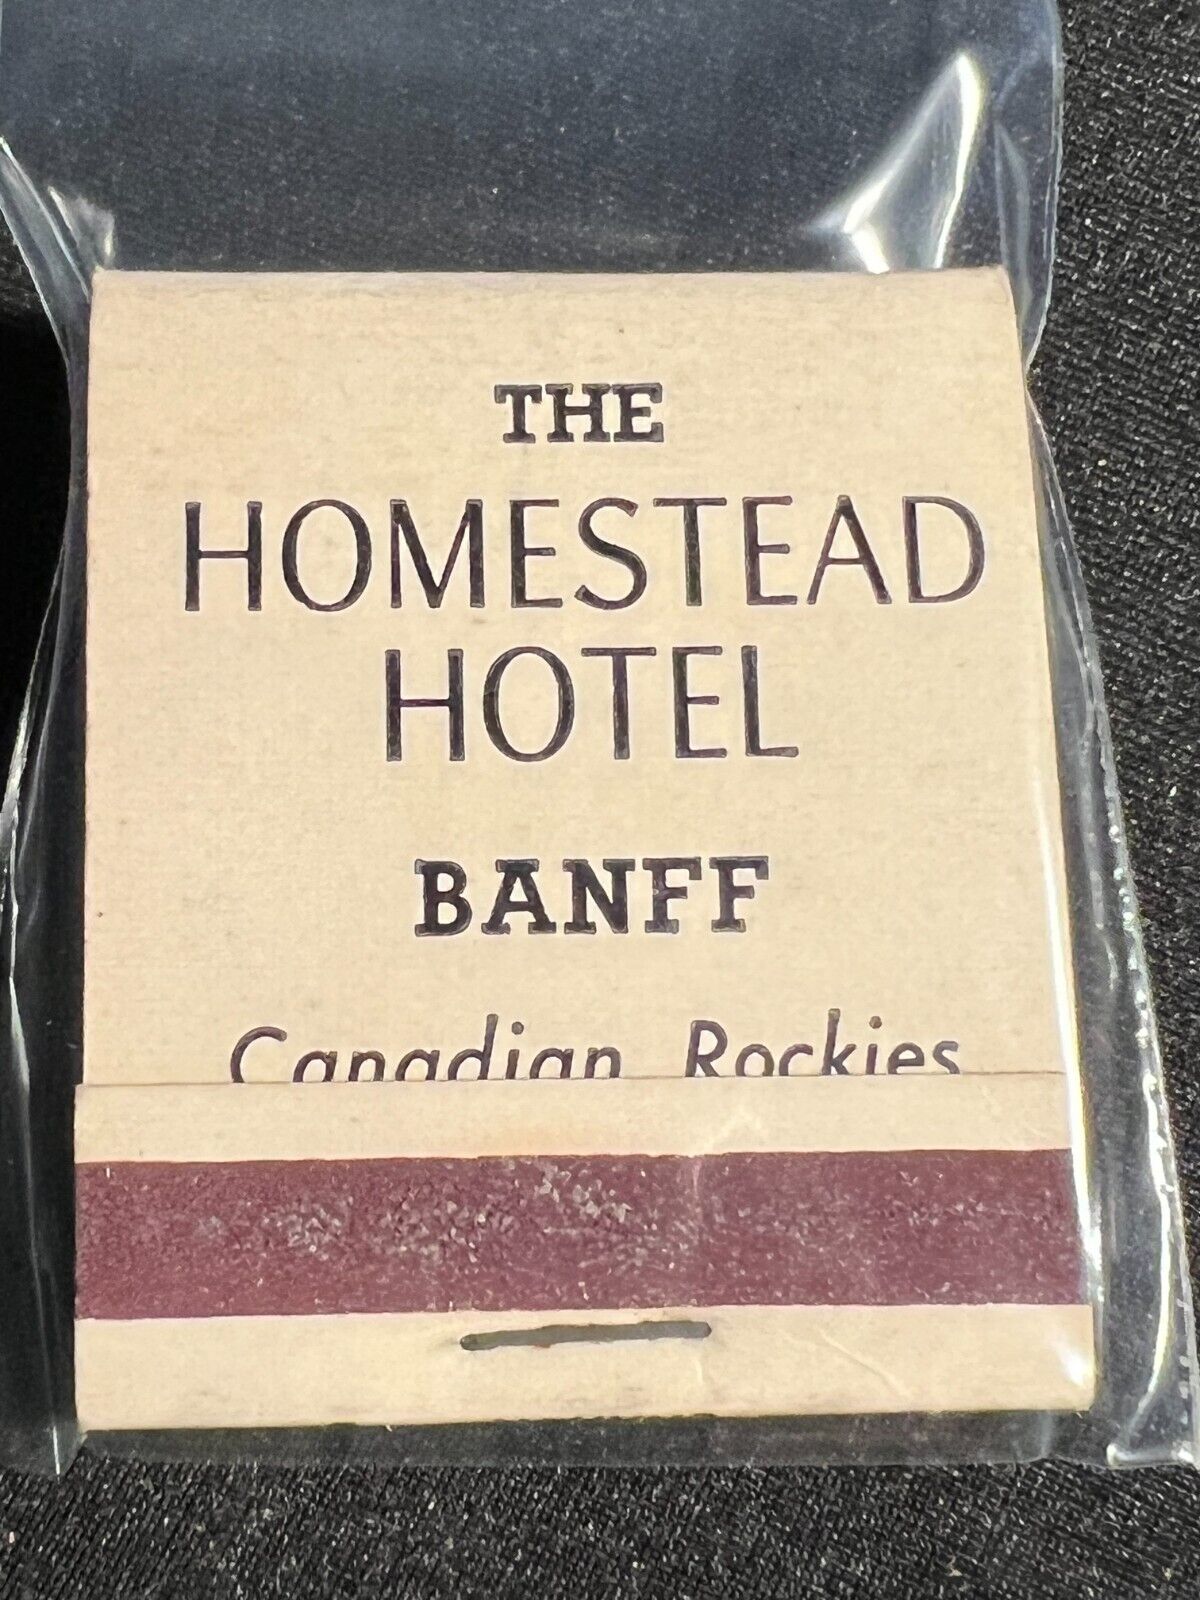 VINTAGE MATCHBOOK - THE HOMESTEAD HOTEL - BANFF - CANADIAN ROCKIES - UNSTRUCK